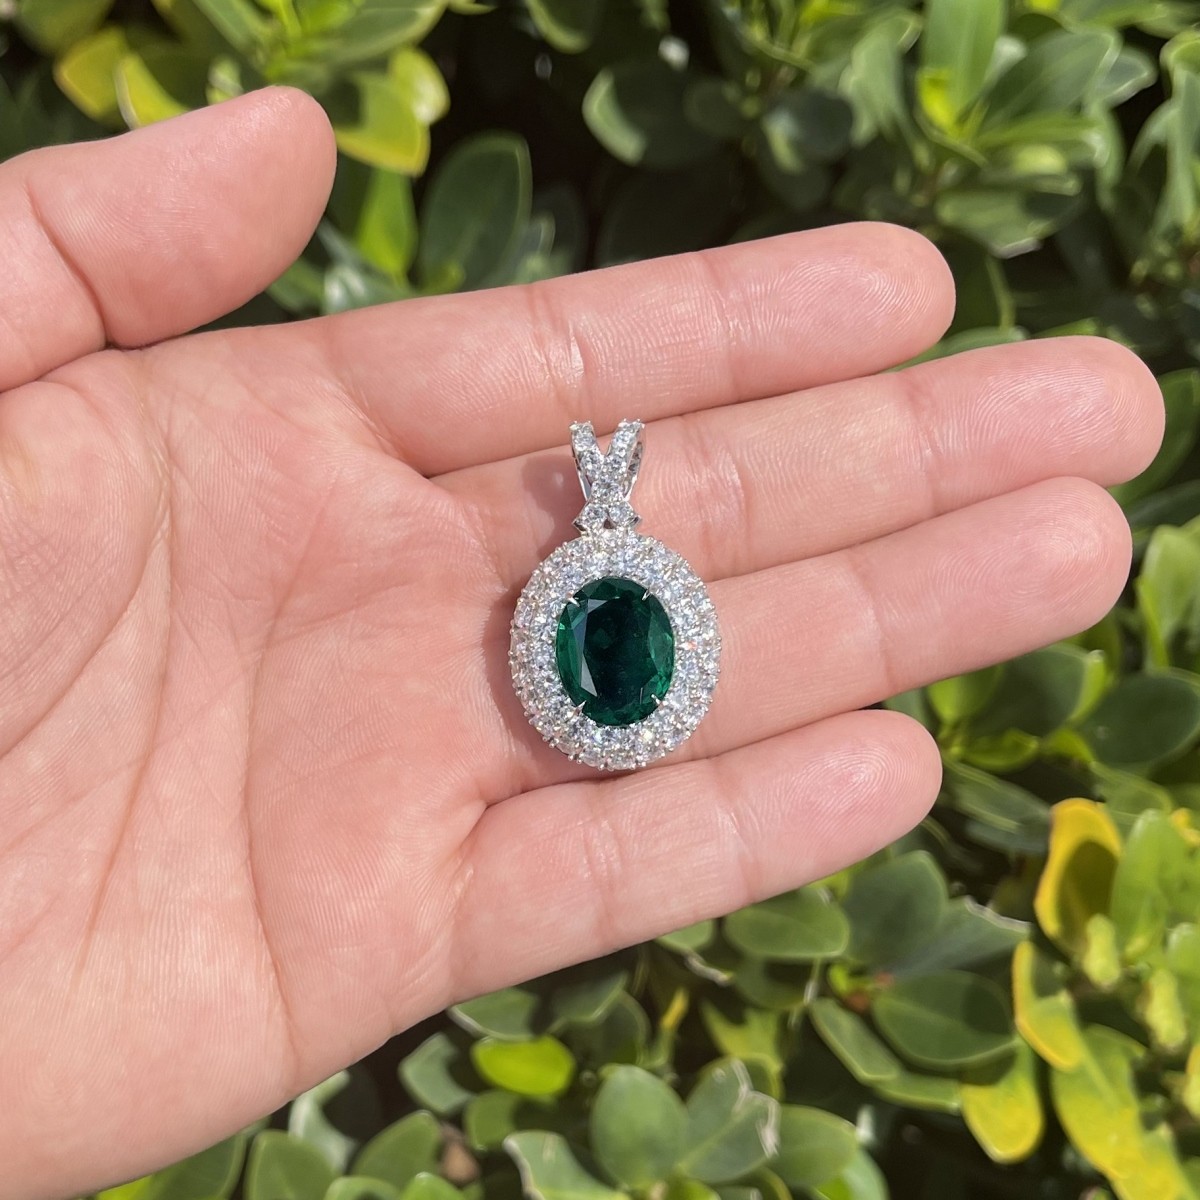 Emerald, Diamond and Platinum Pendant